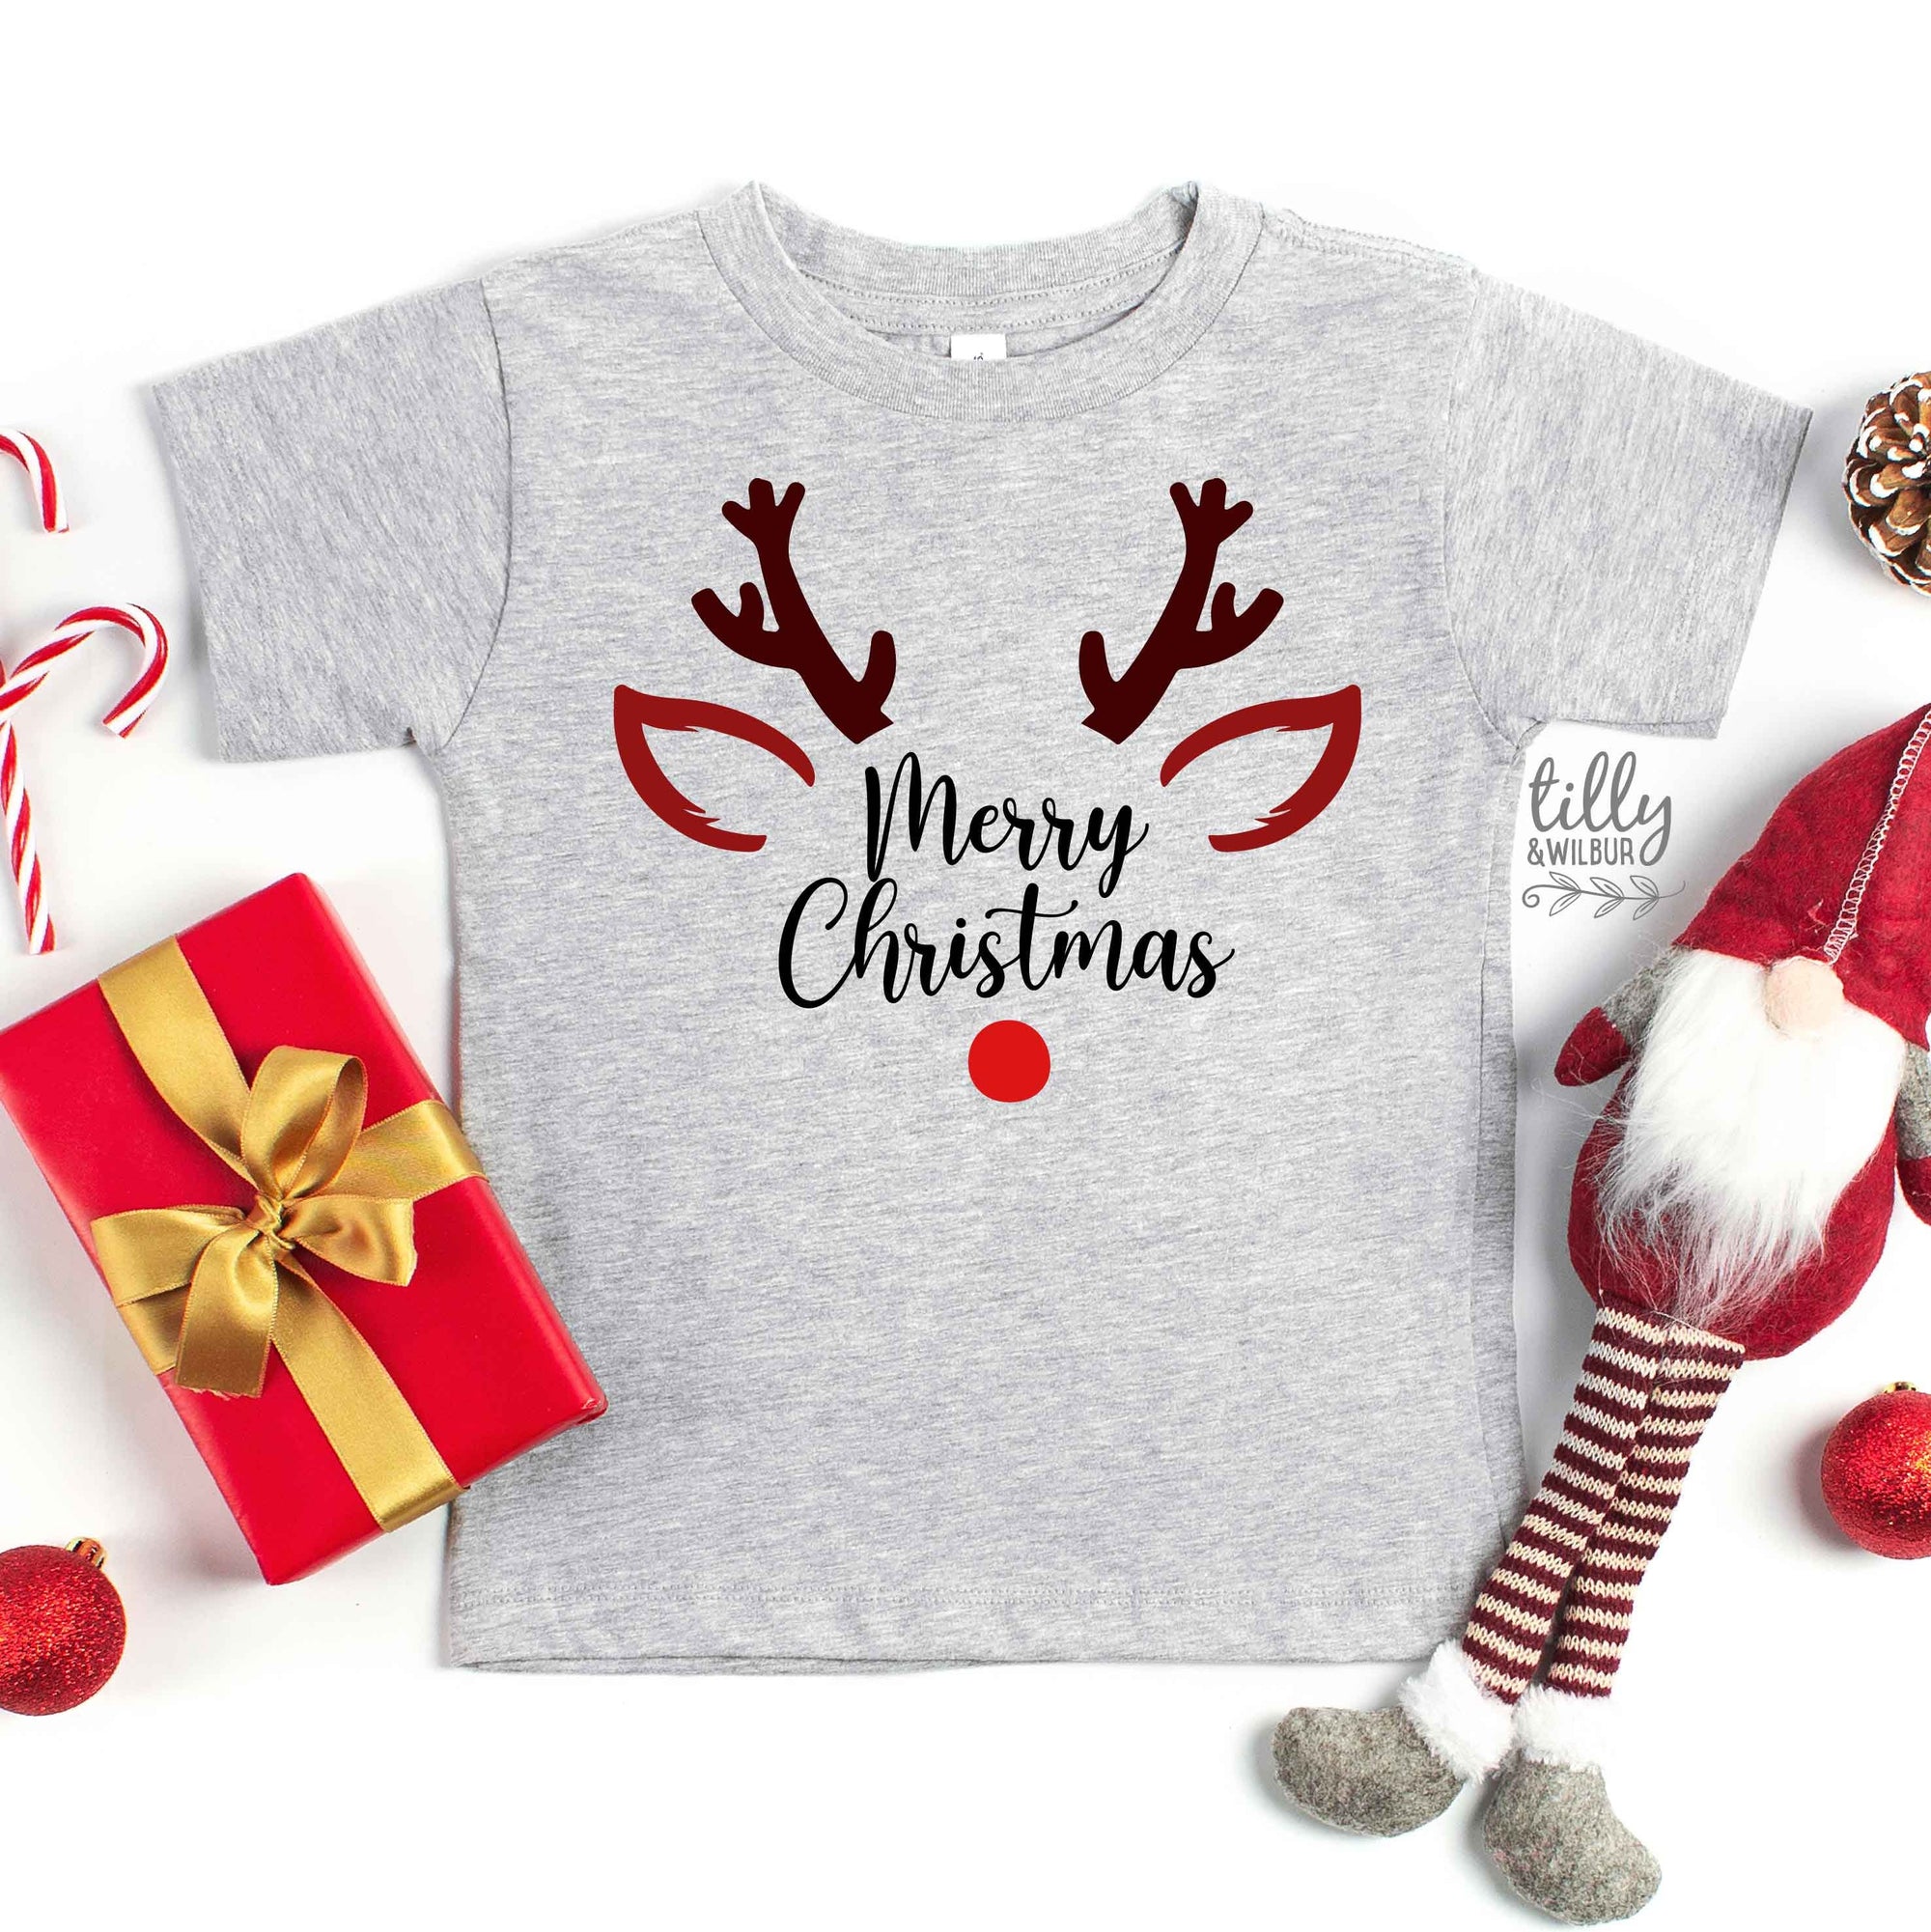 Reindeer Christmas T-Shirt, Matching Family Garments Available, Christmas Shirts, Matching Rudolph T-Shirts, Matching Christmas Family Tees